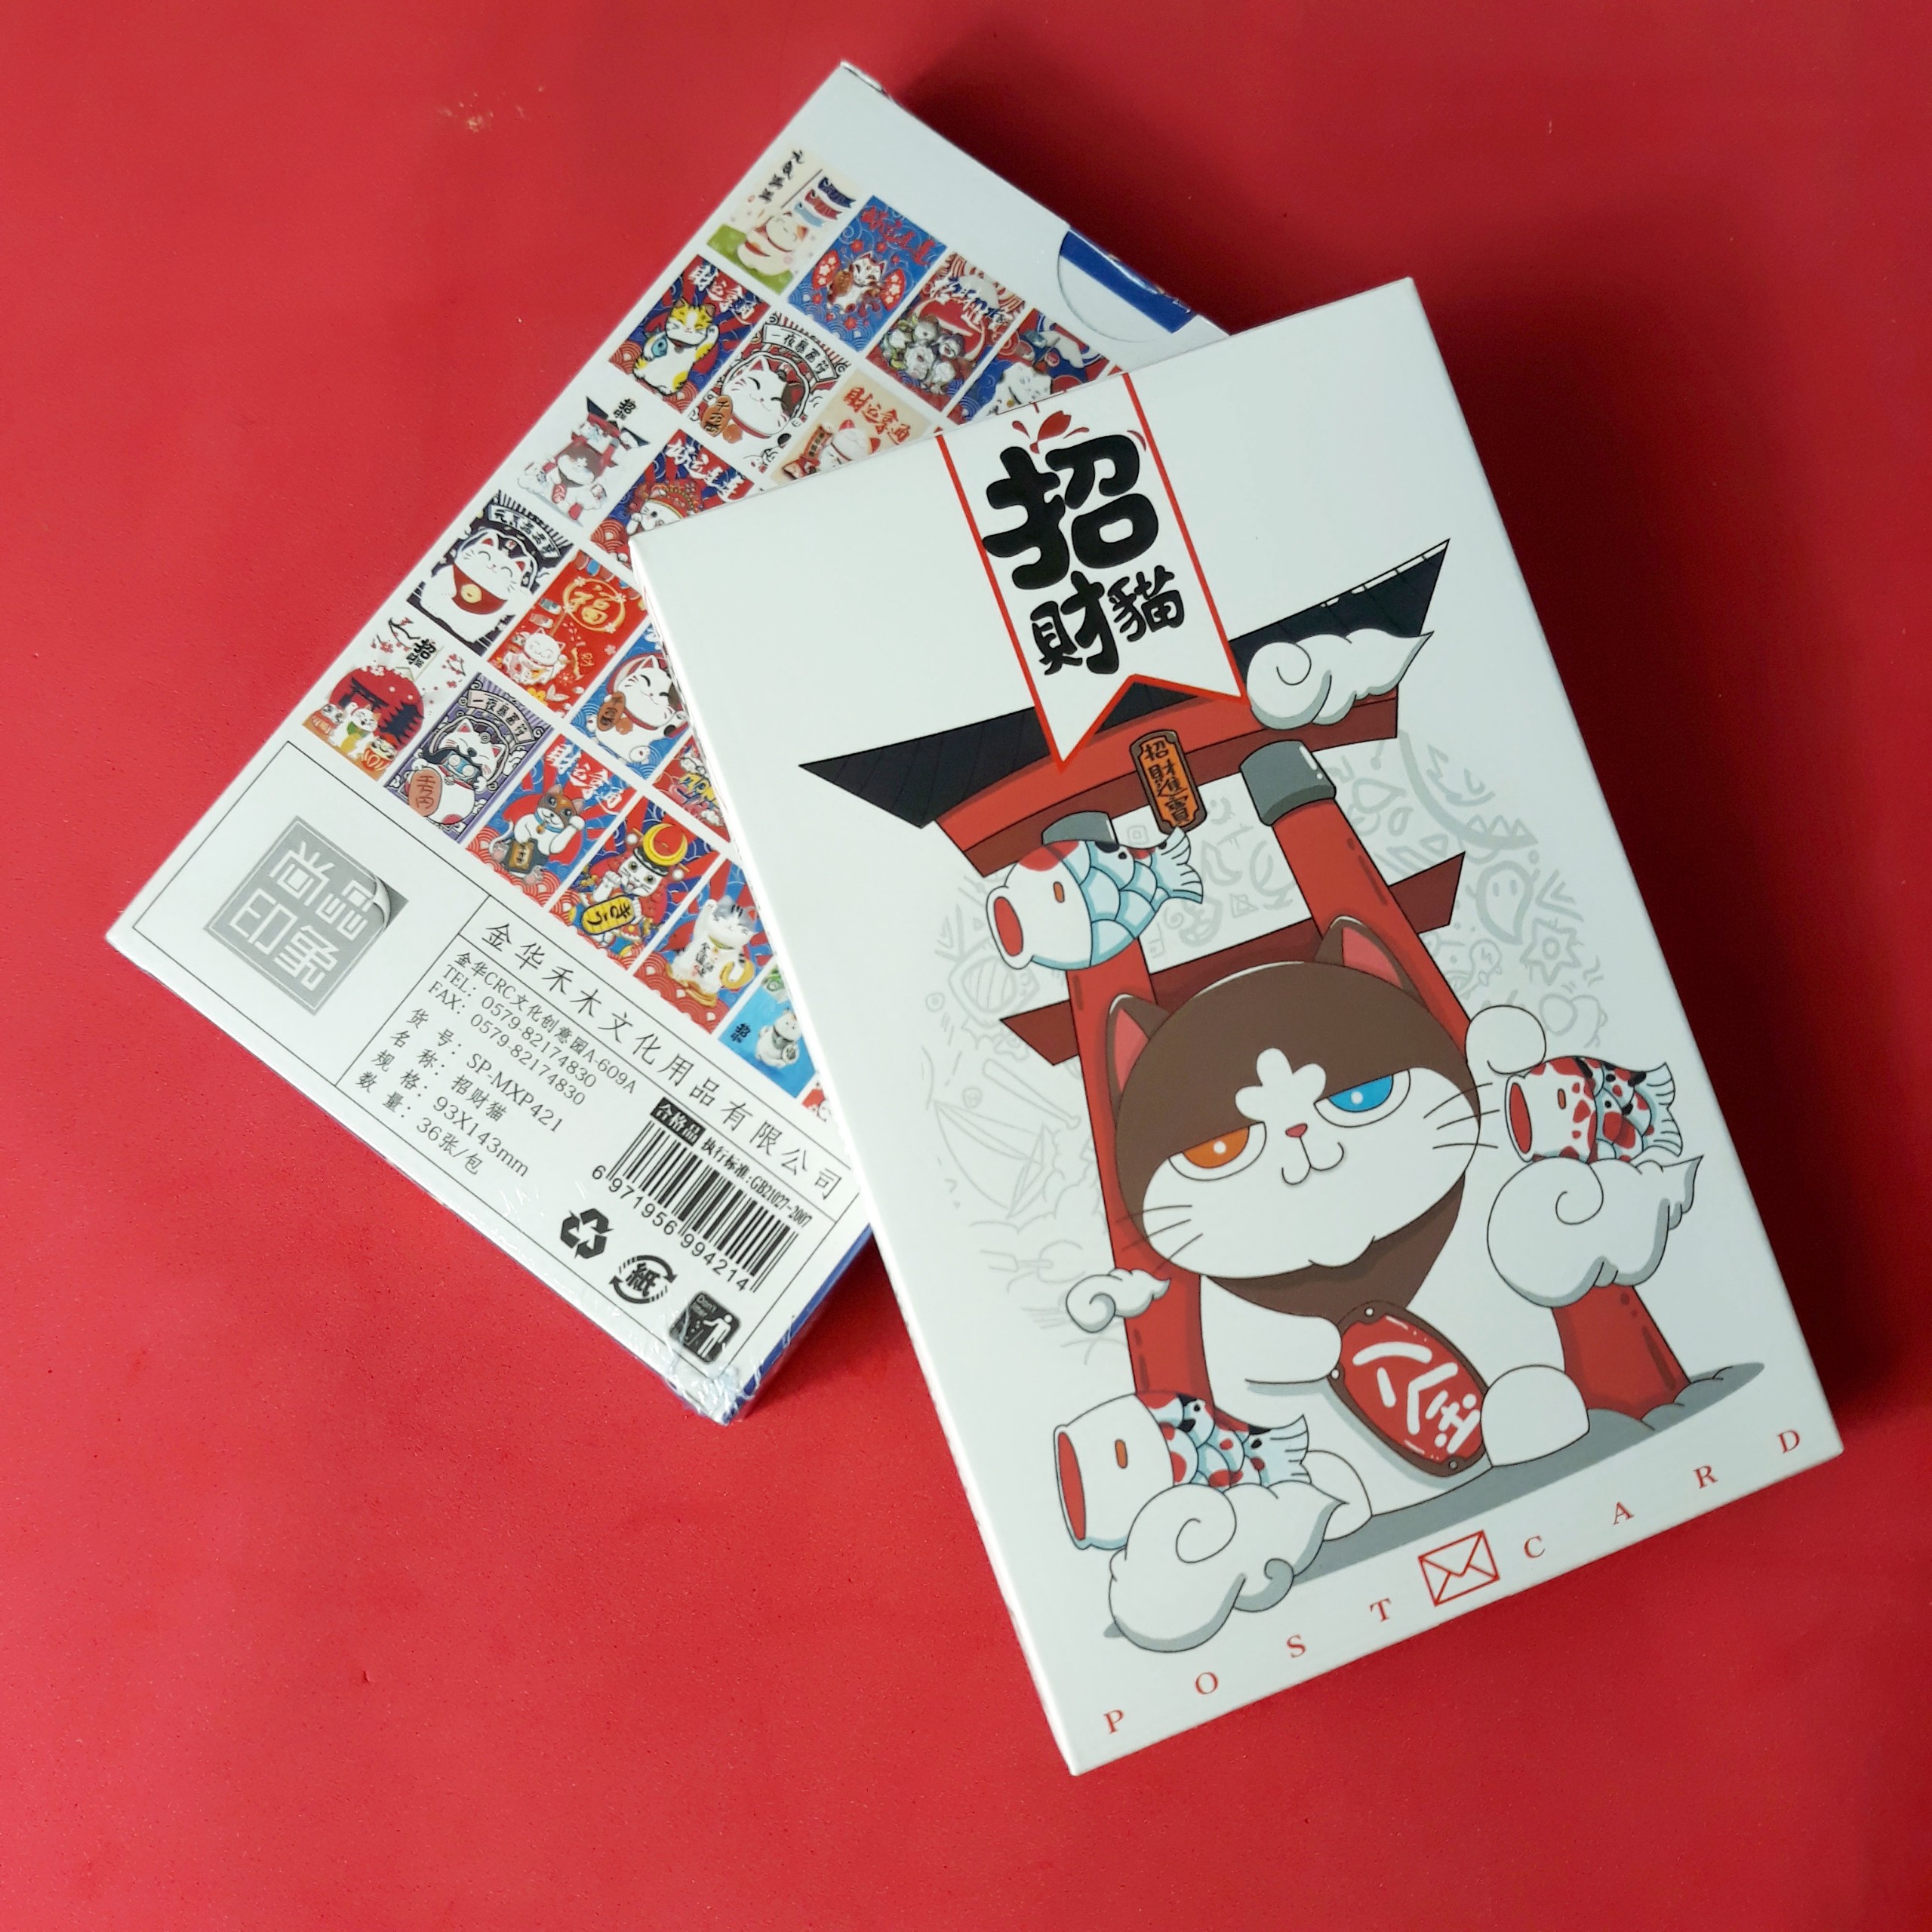 Hộp 36 Post Card Chủ Đề Mèo May Mắn Maneki Neko (9.3 x 14.3cm)